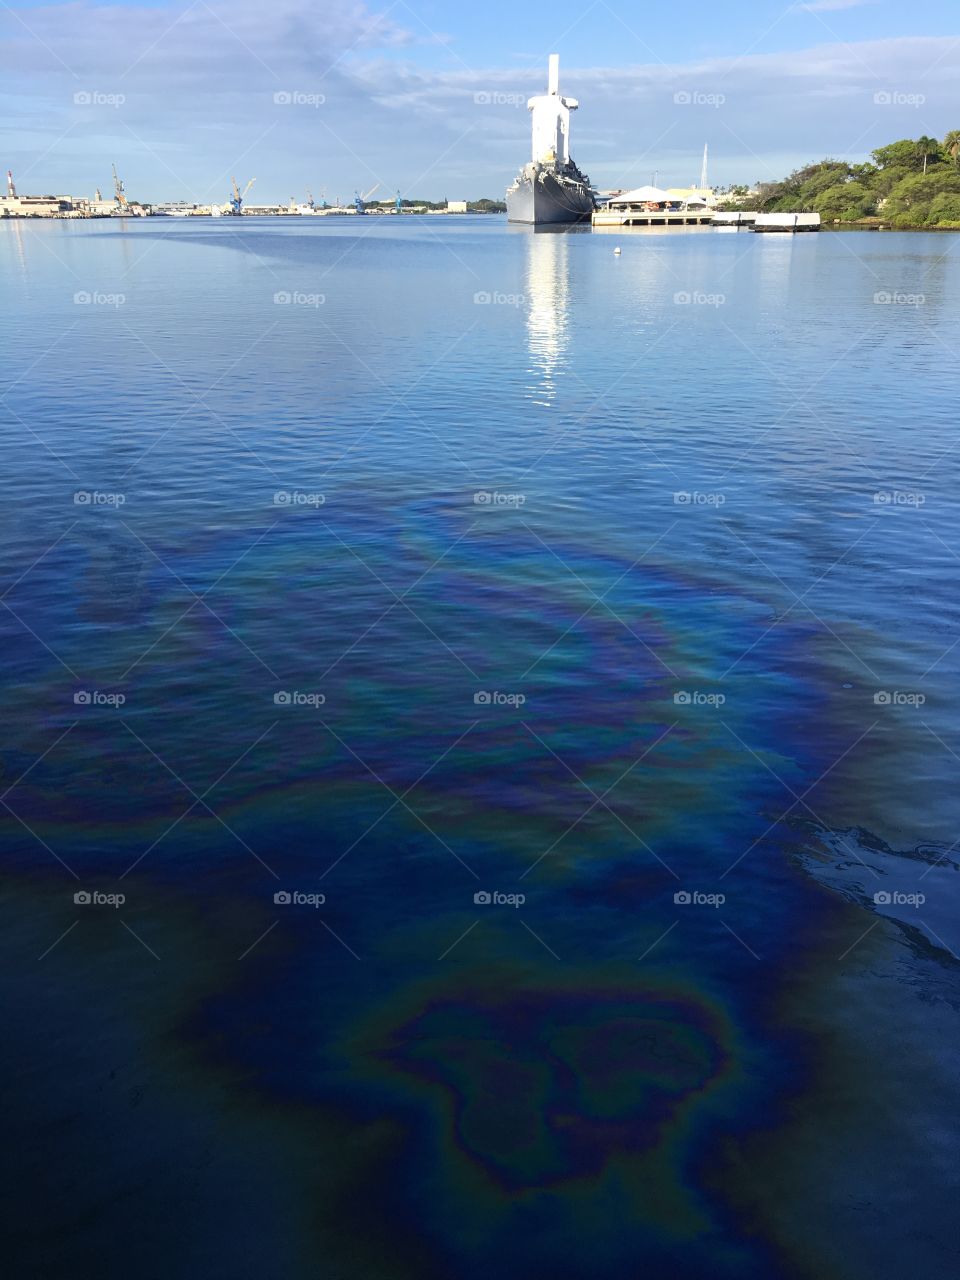 Oil still leaking from the USS ARIZONA